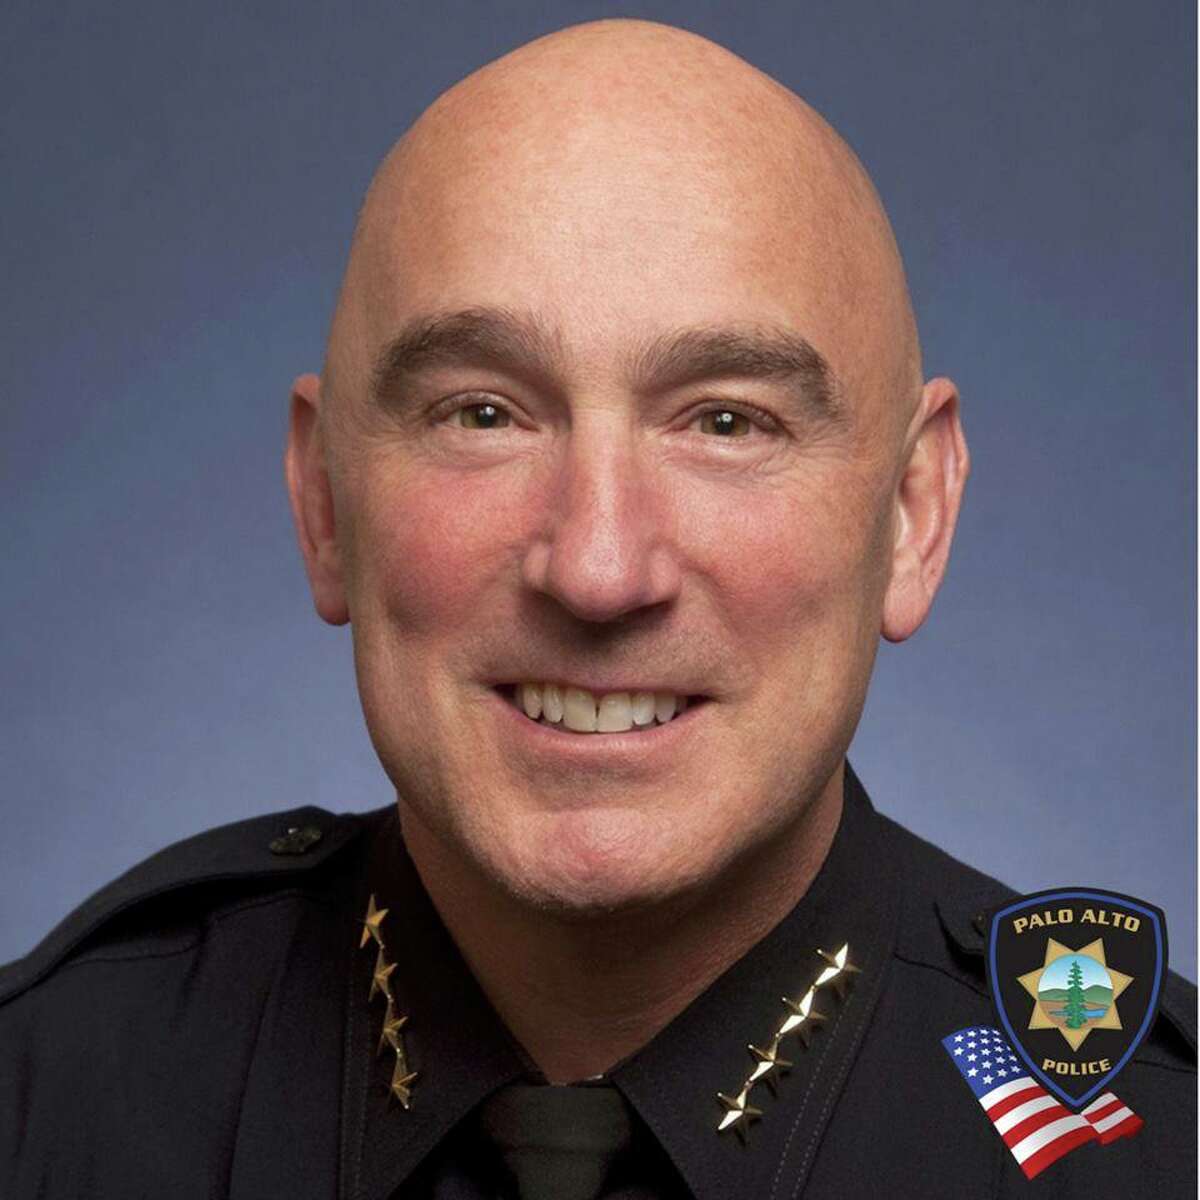 Robert Jonsen is the Police Chief in Palo Alto.